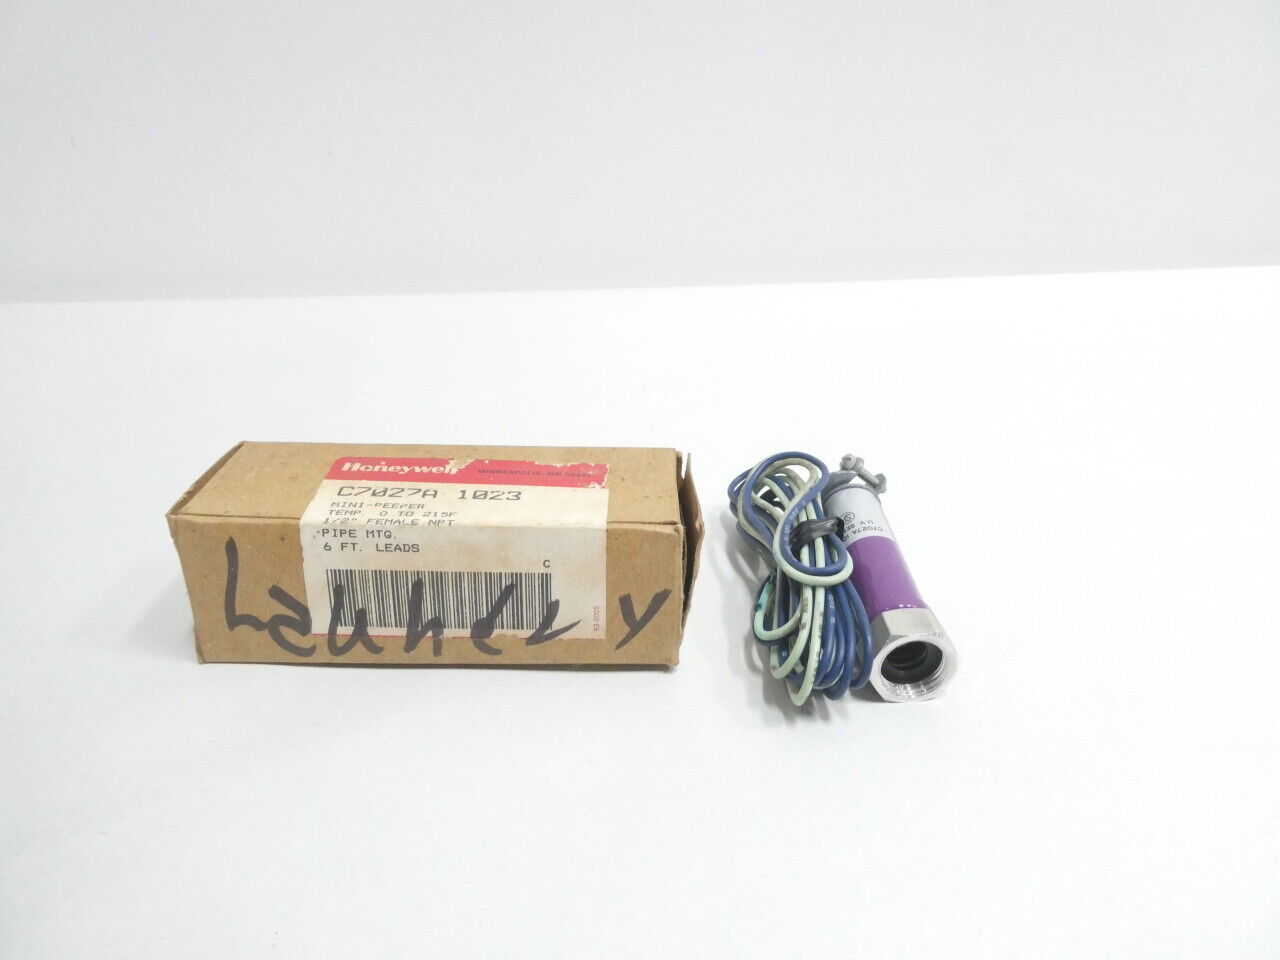 Honeywell C7027A 1023 Mini-peeper Ultraviolet Sensor